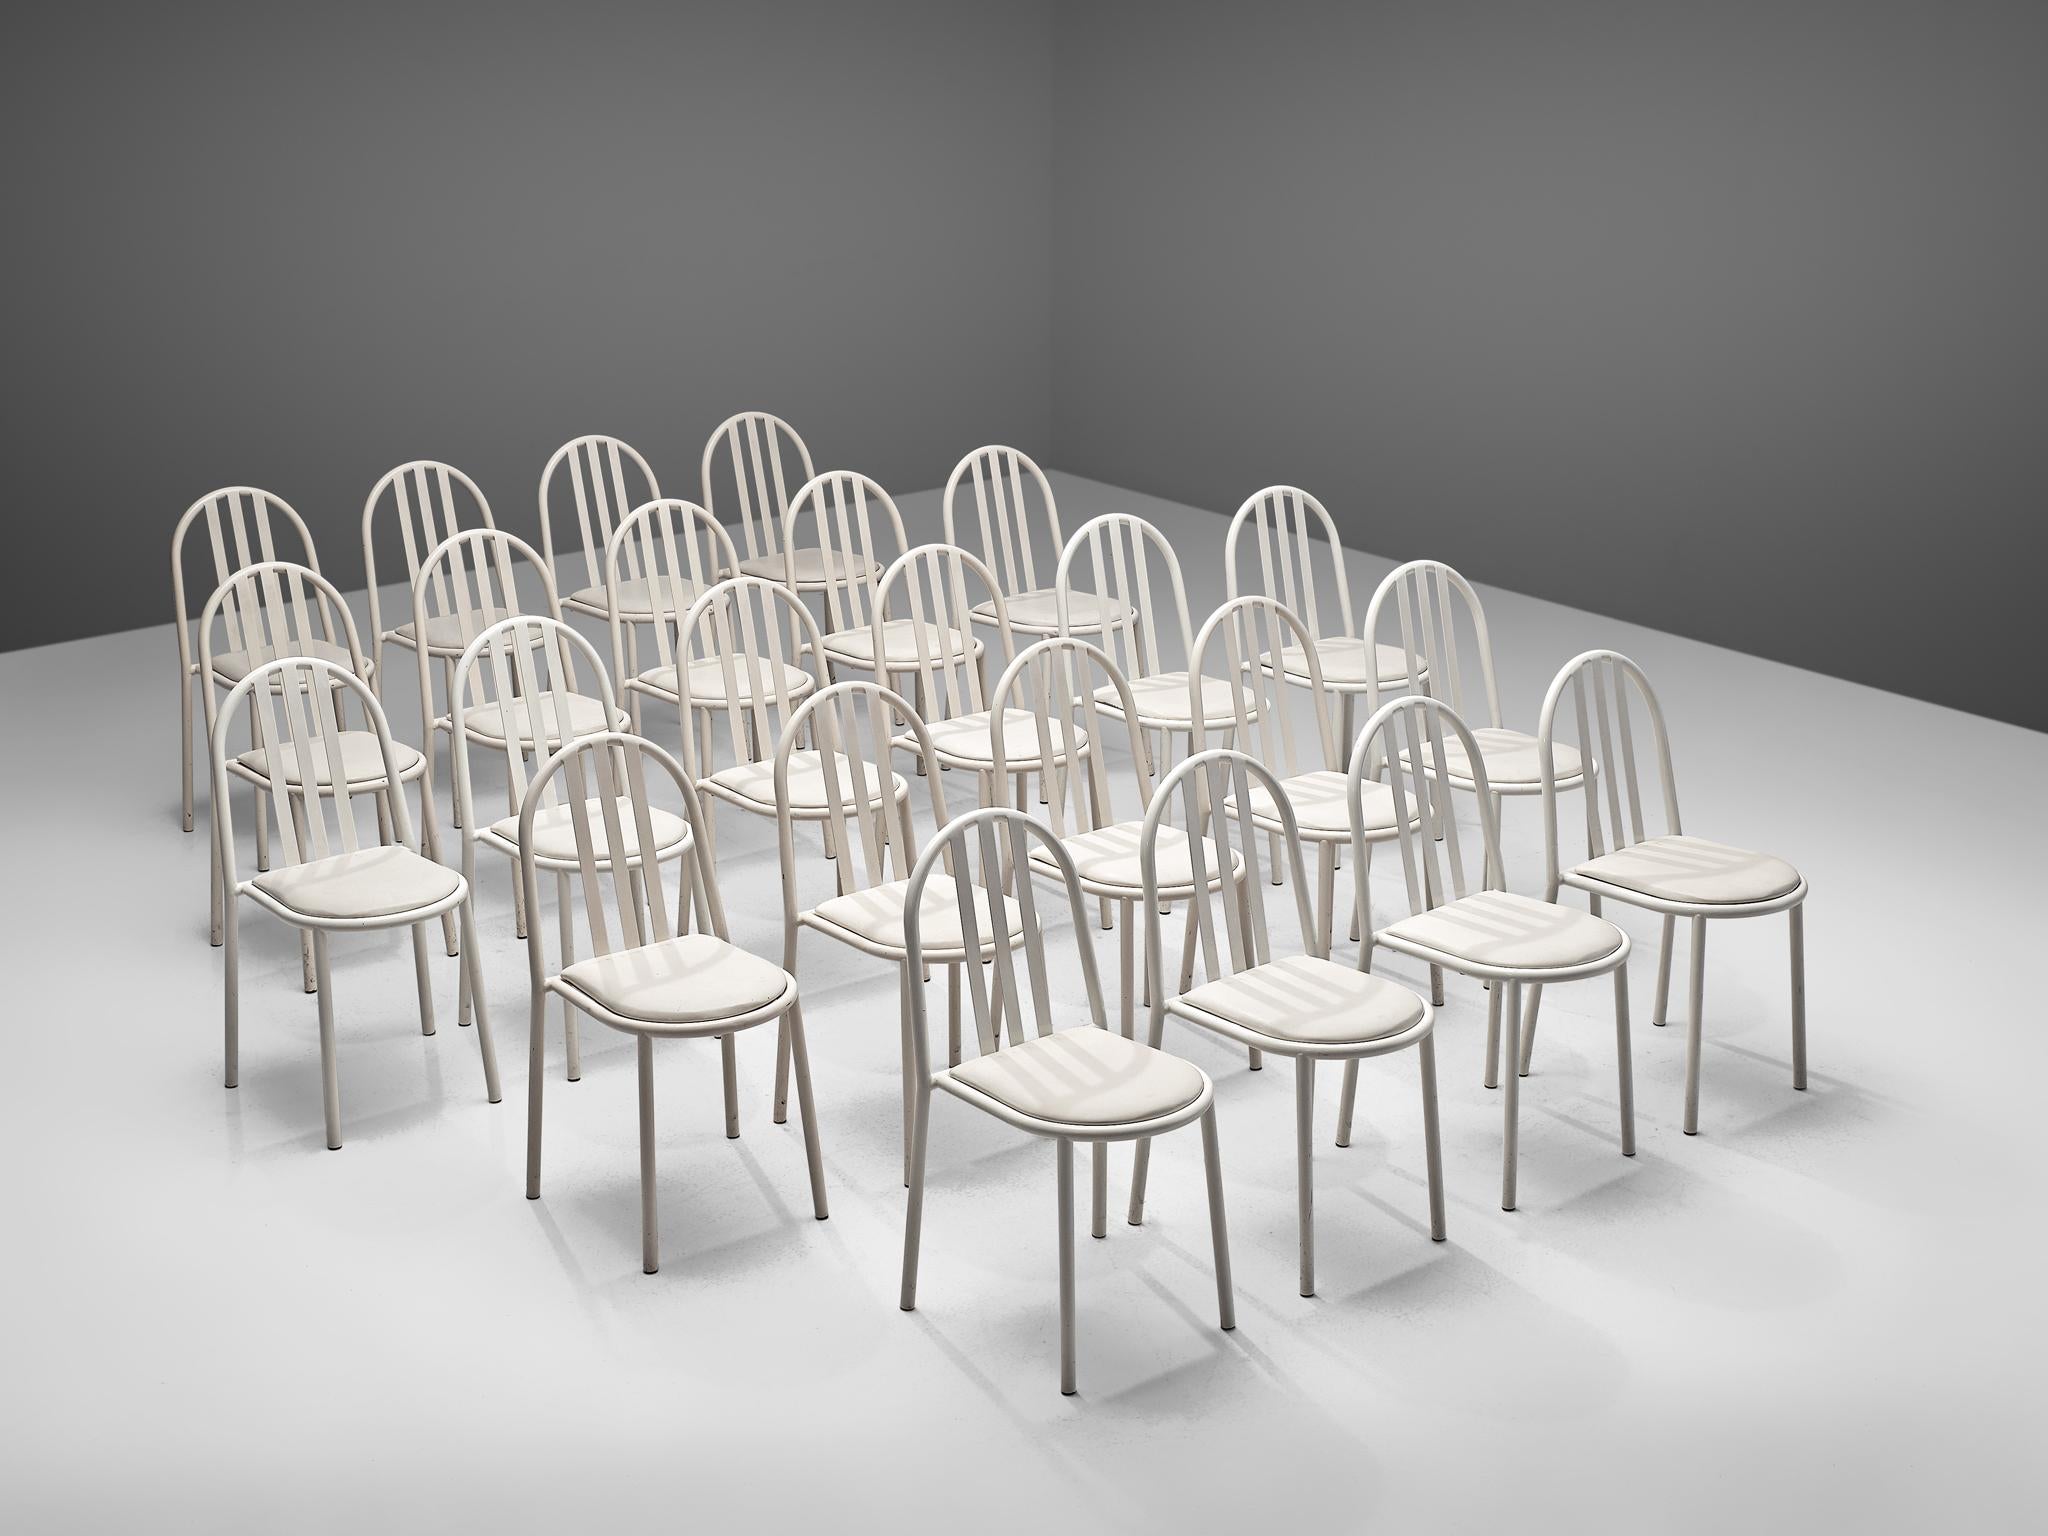 Large Set of White Tubular Steel Chairs by Robert Mallet Stevens